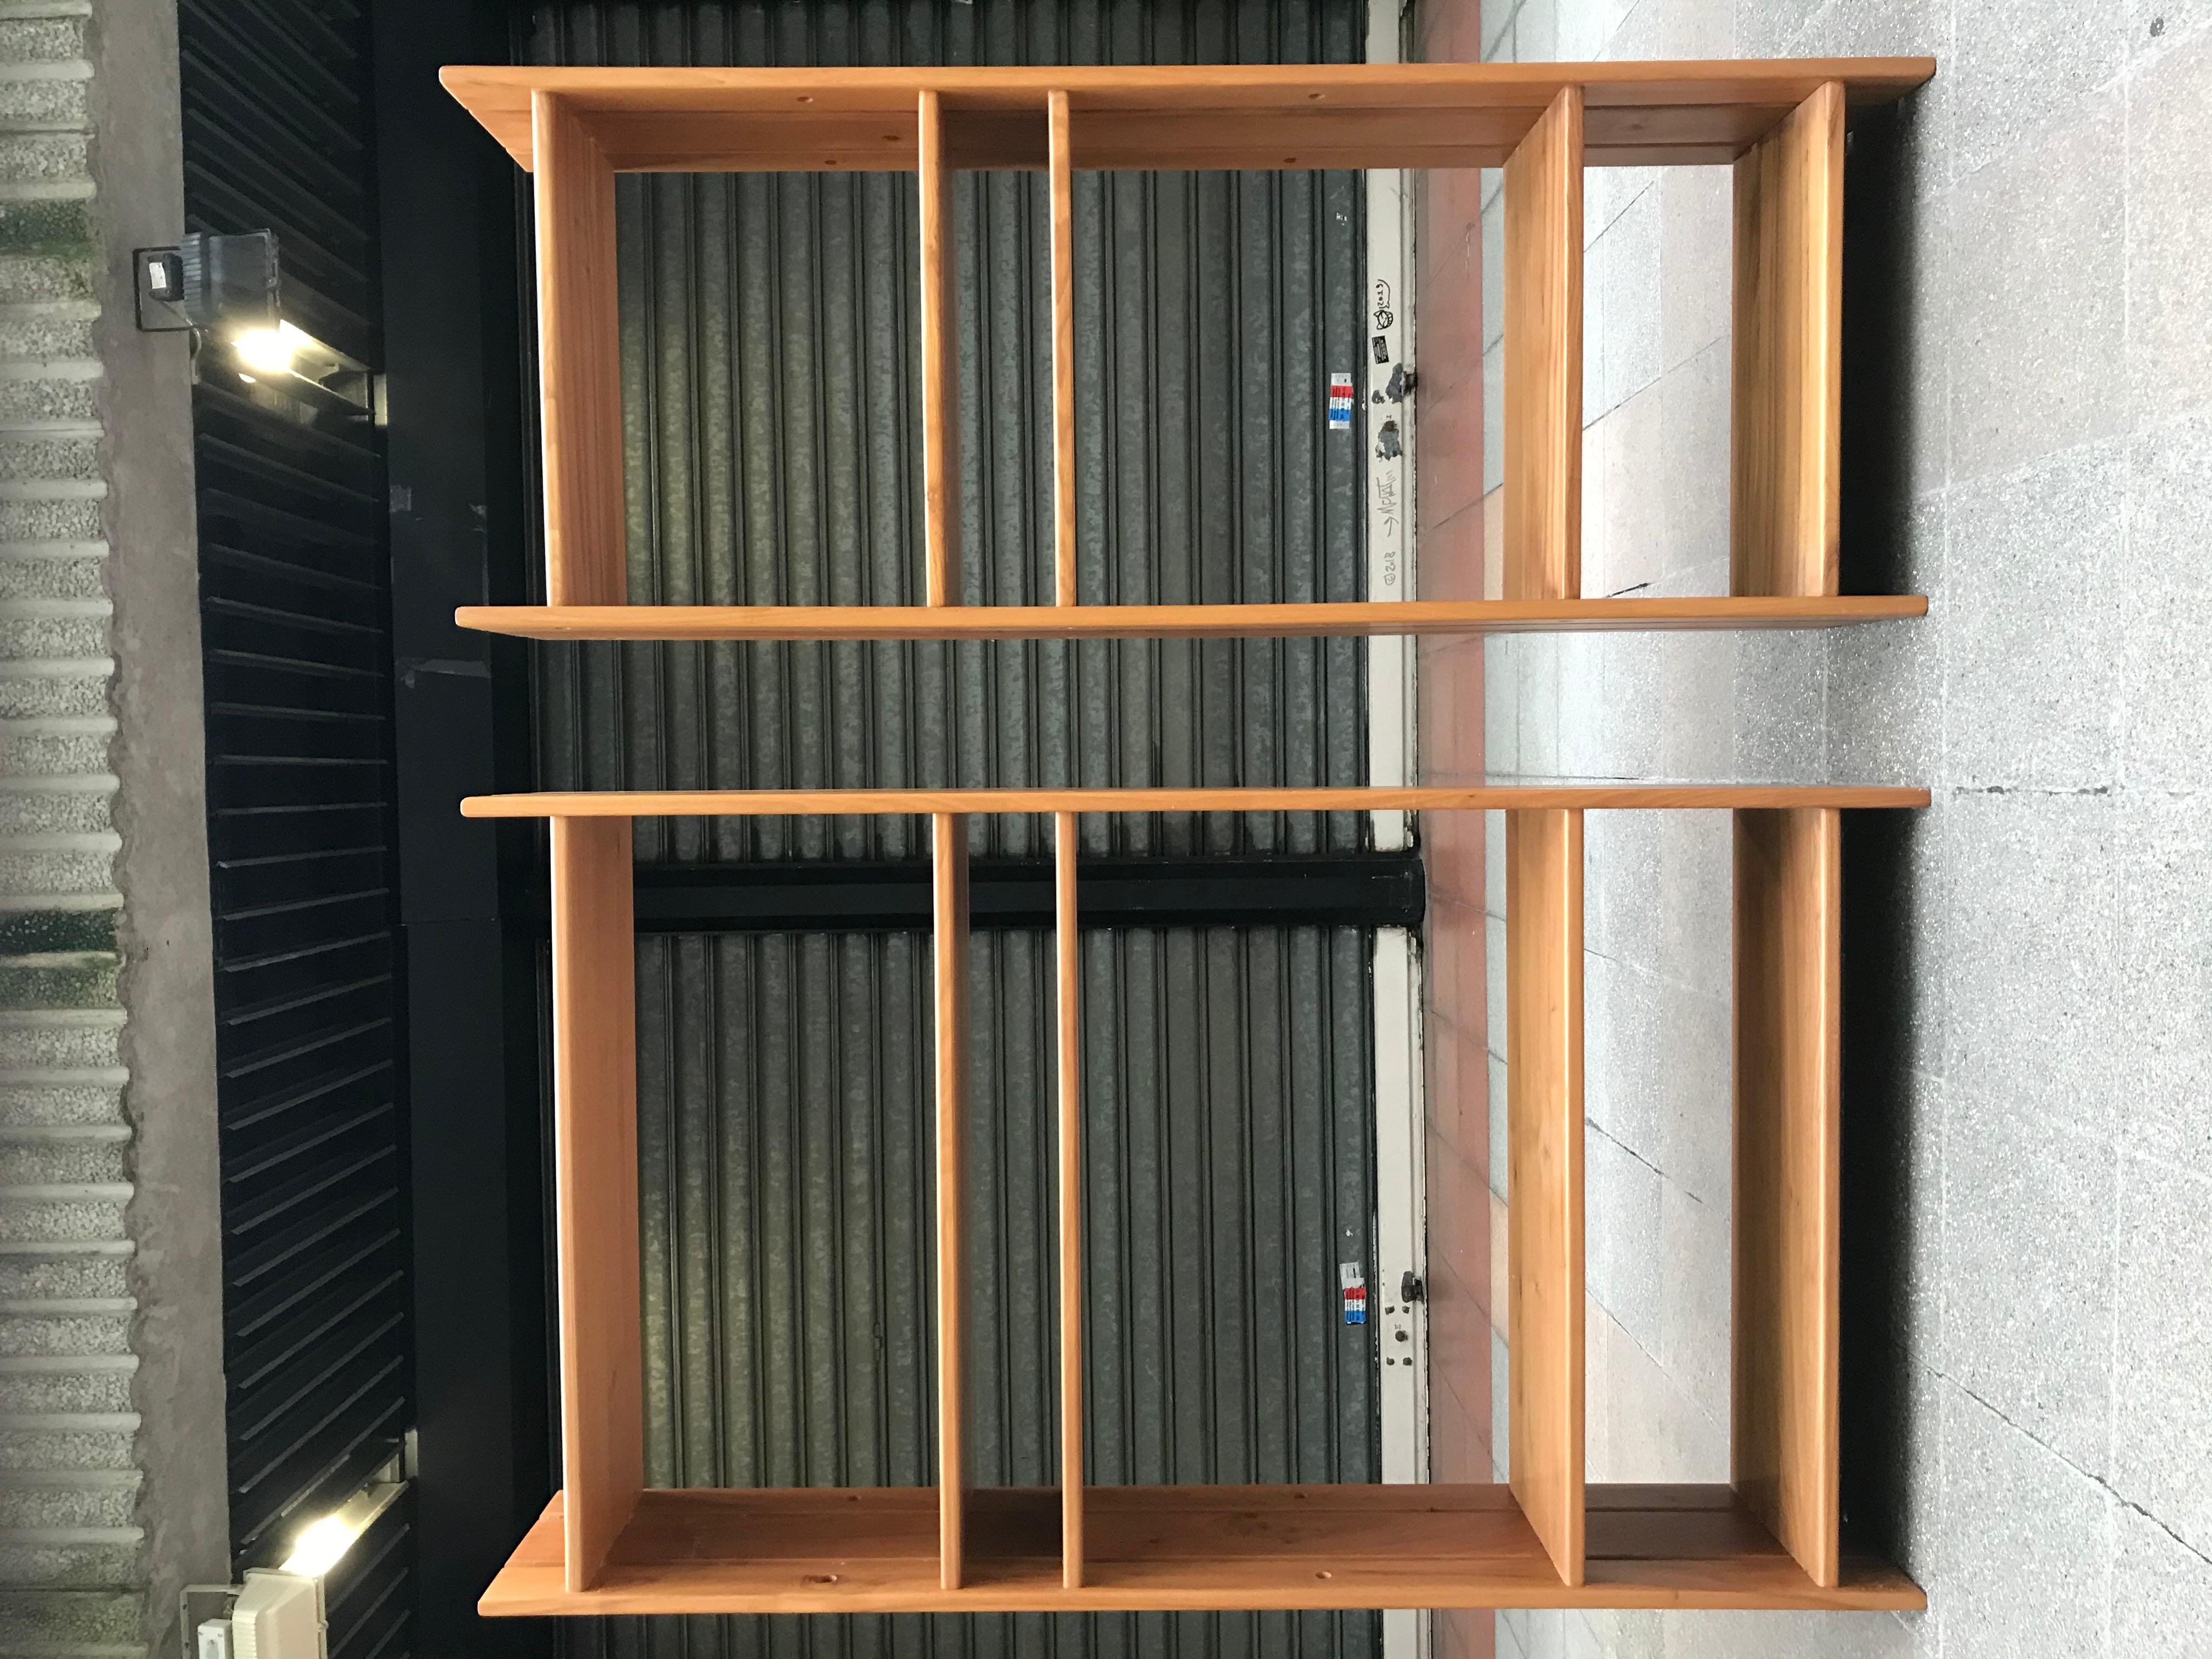 Regain set of two bookcases in solid elm,
circa 1974
Measures: 1: 34.5 L x 153 x 29 P
1: 57 L x 153 x 29 P.